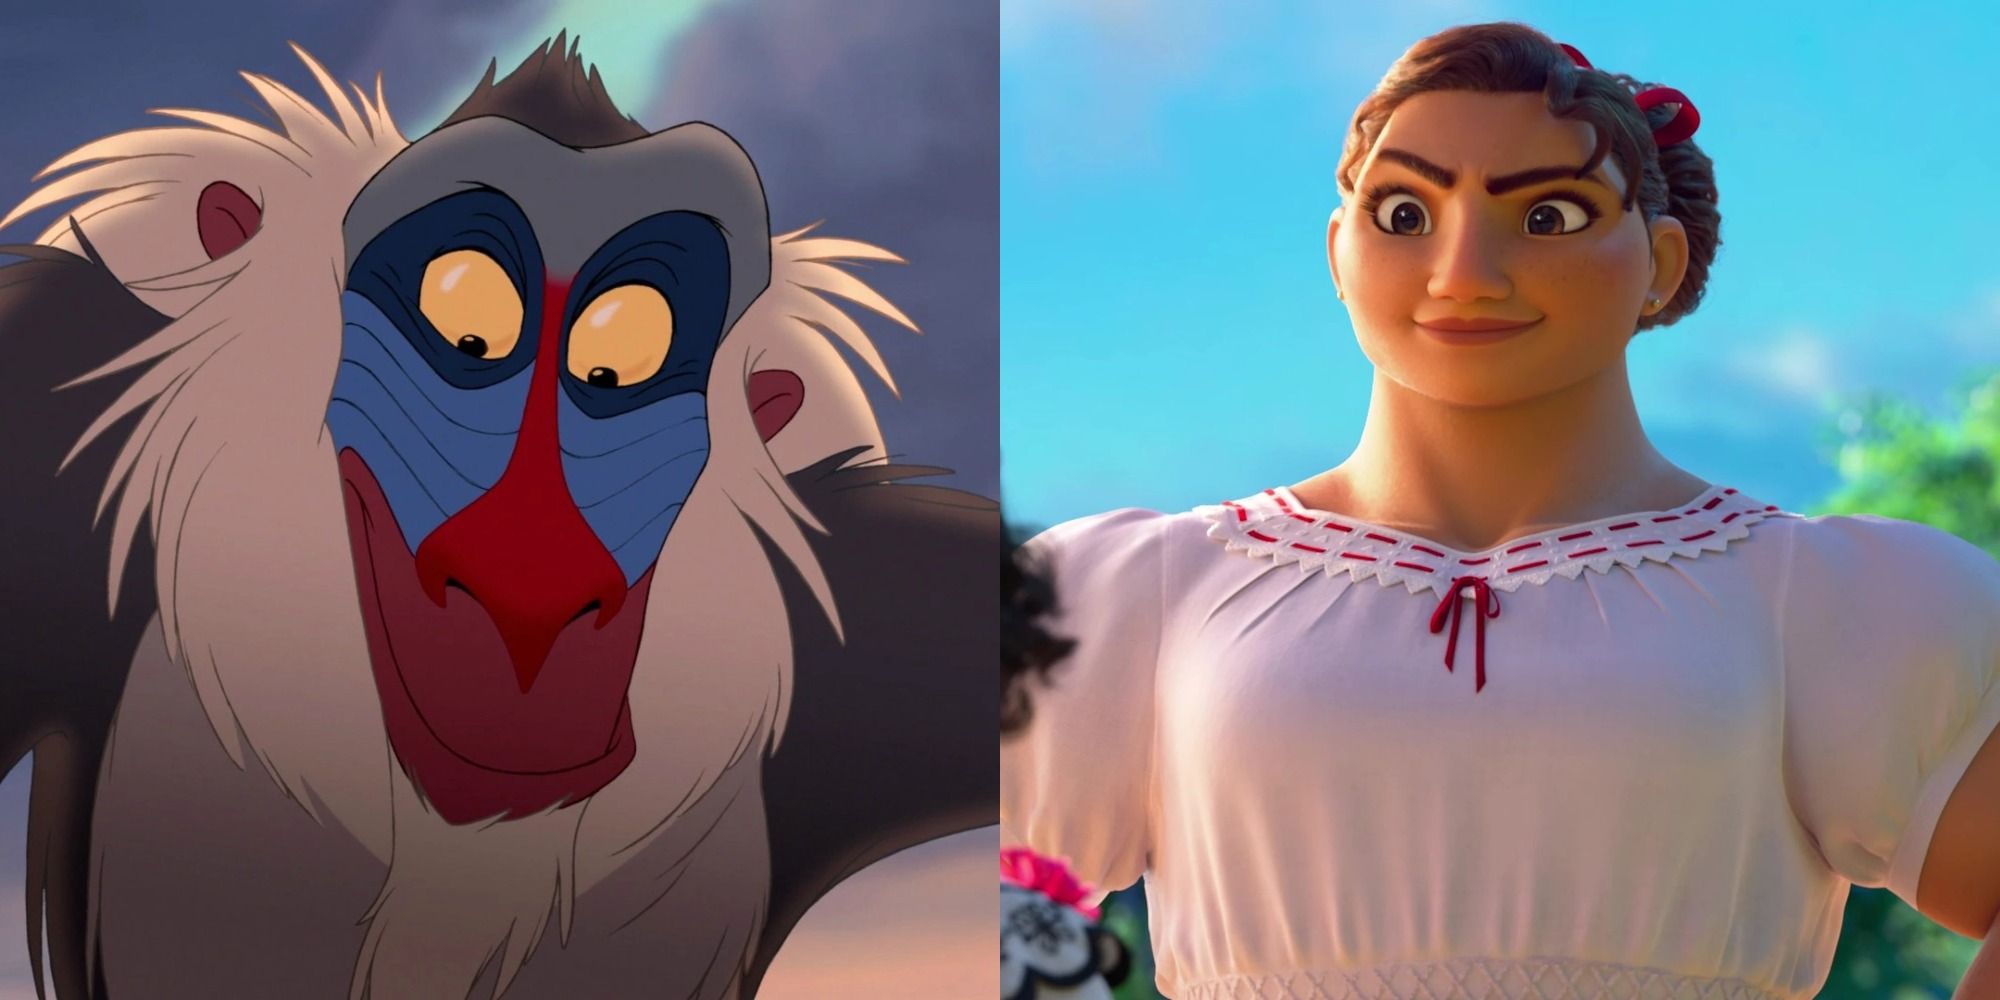 Split image showing Rafiki in The Lion King and Luisa in Encanto.